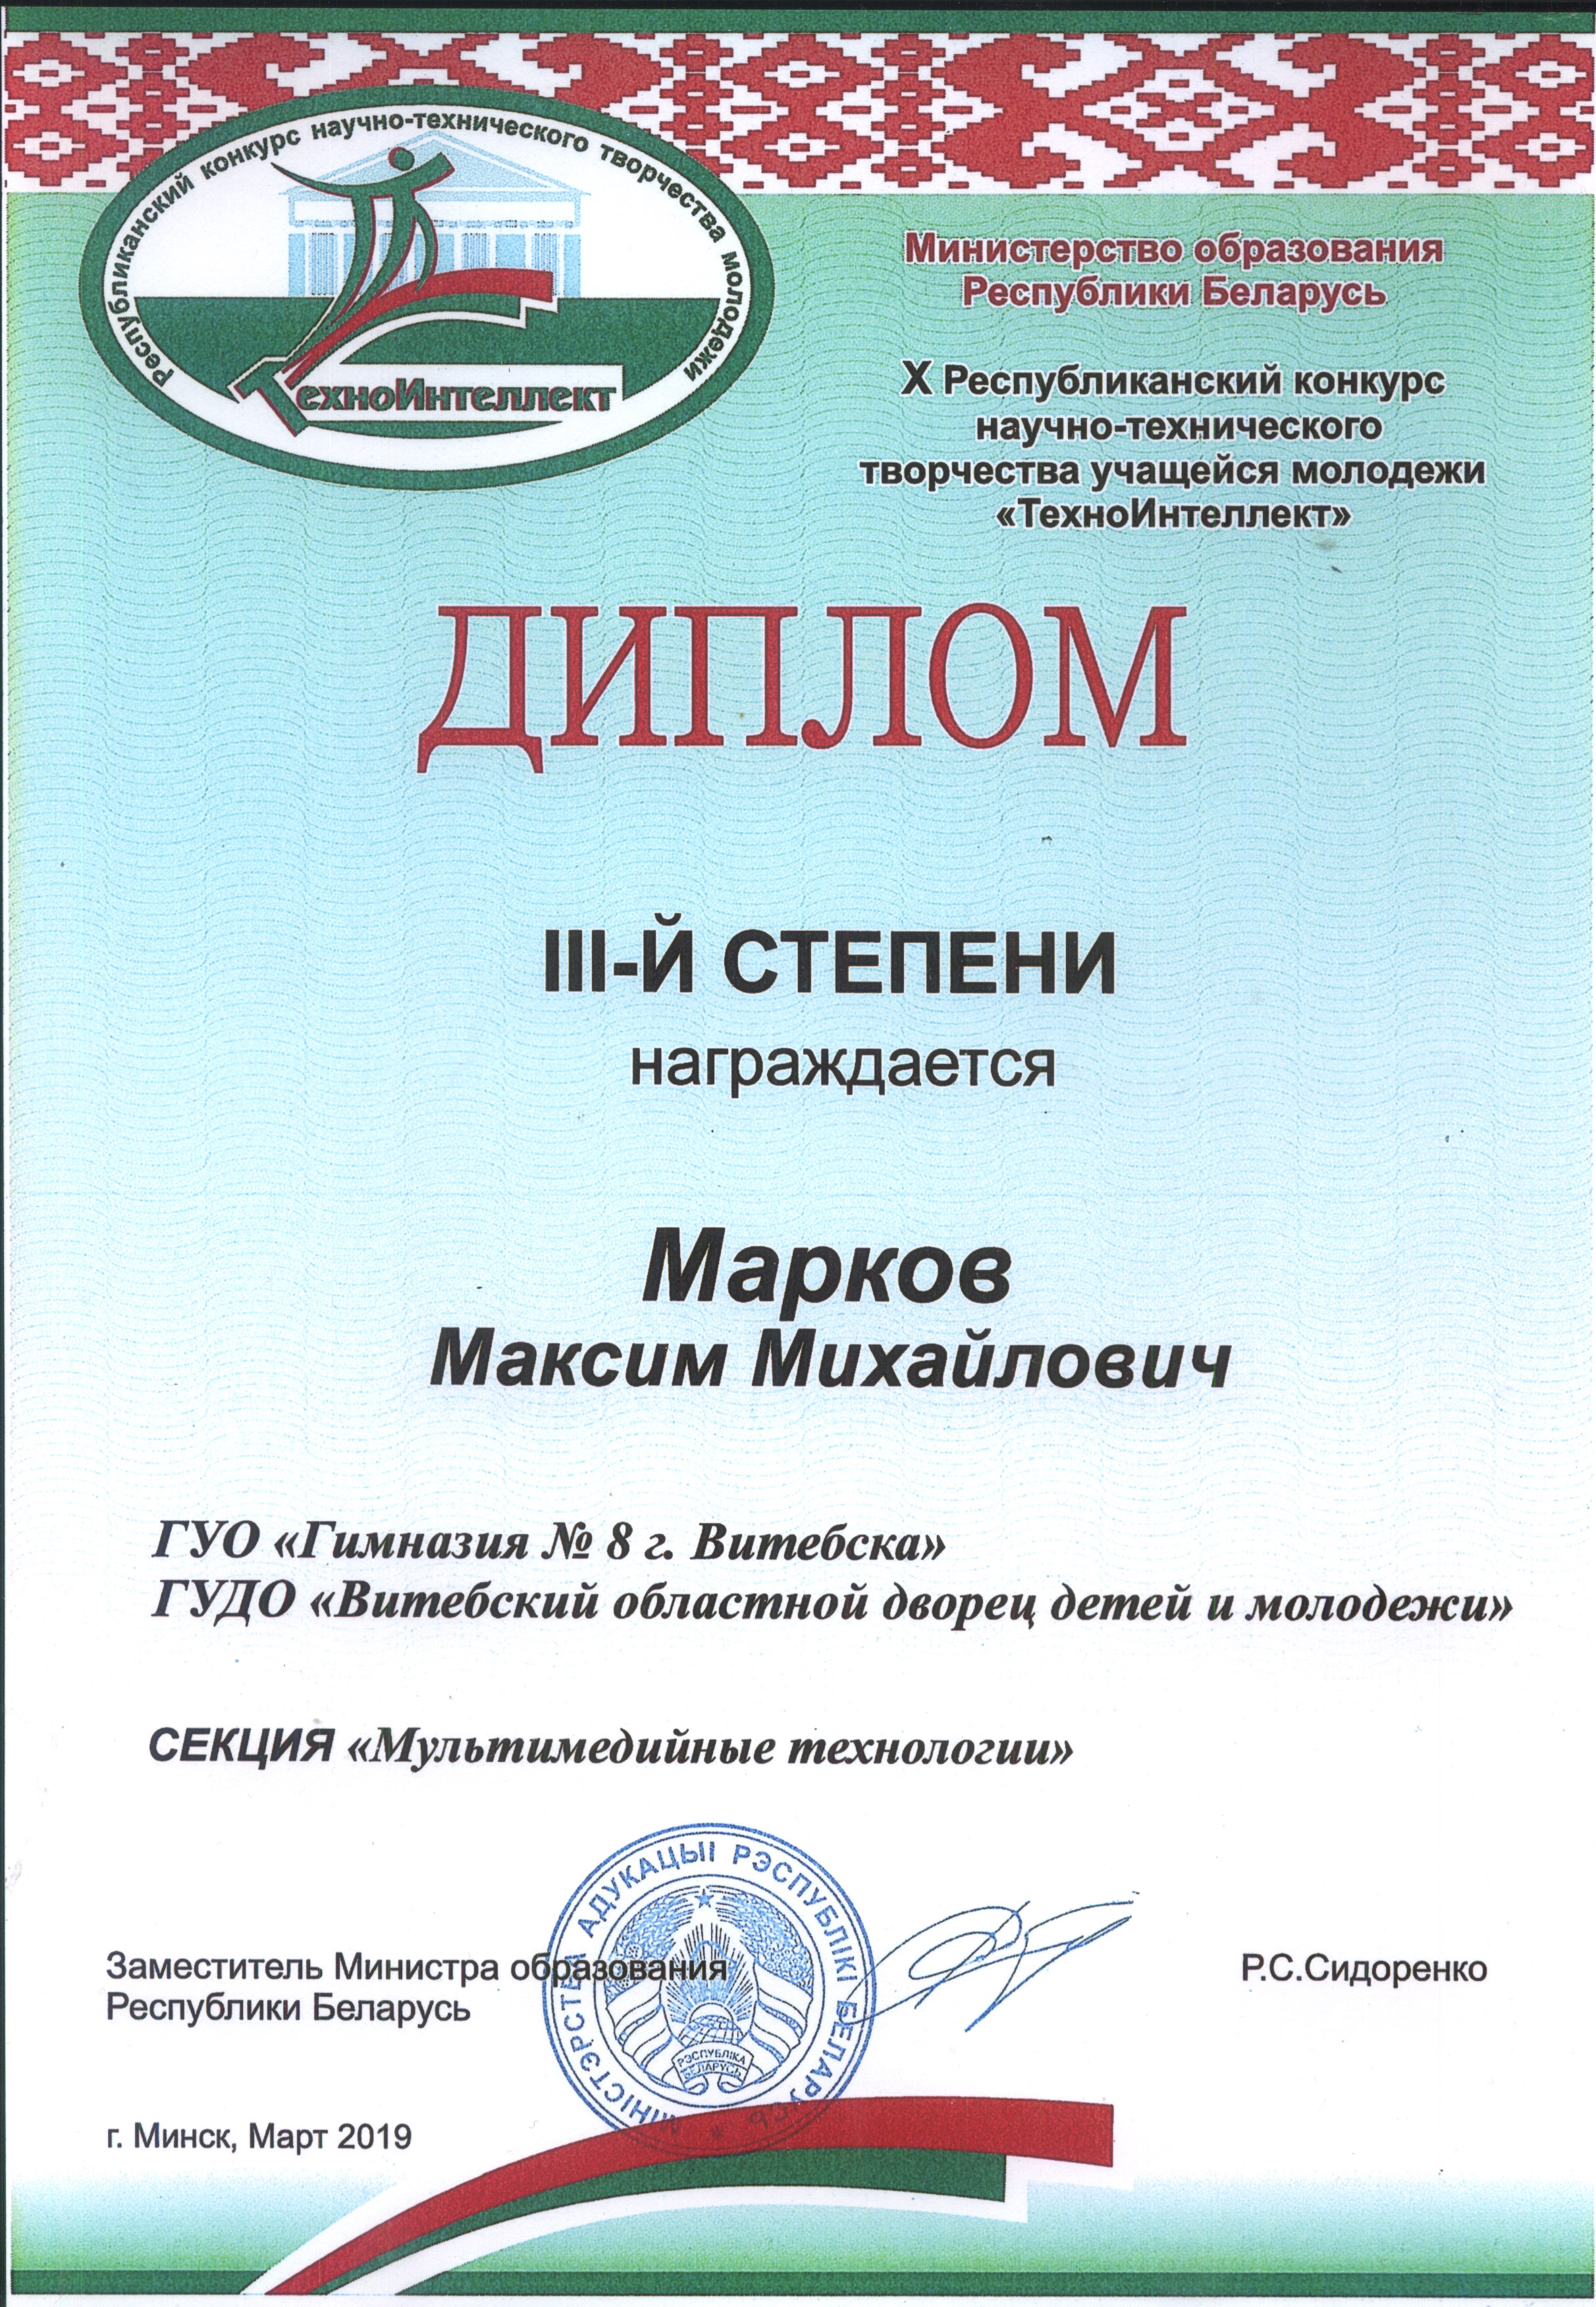 Diplom Markov Texnointelektpesp 2019